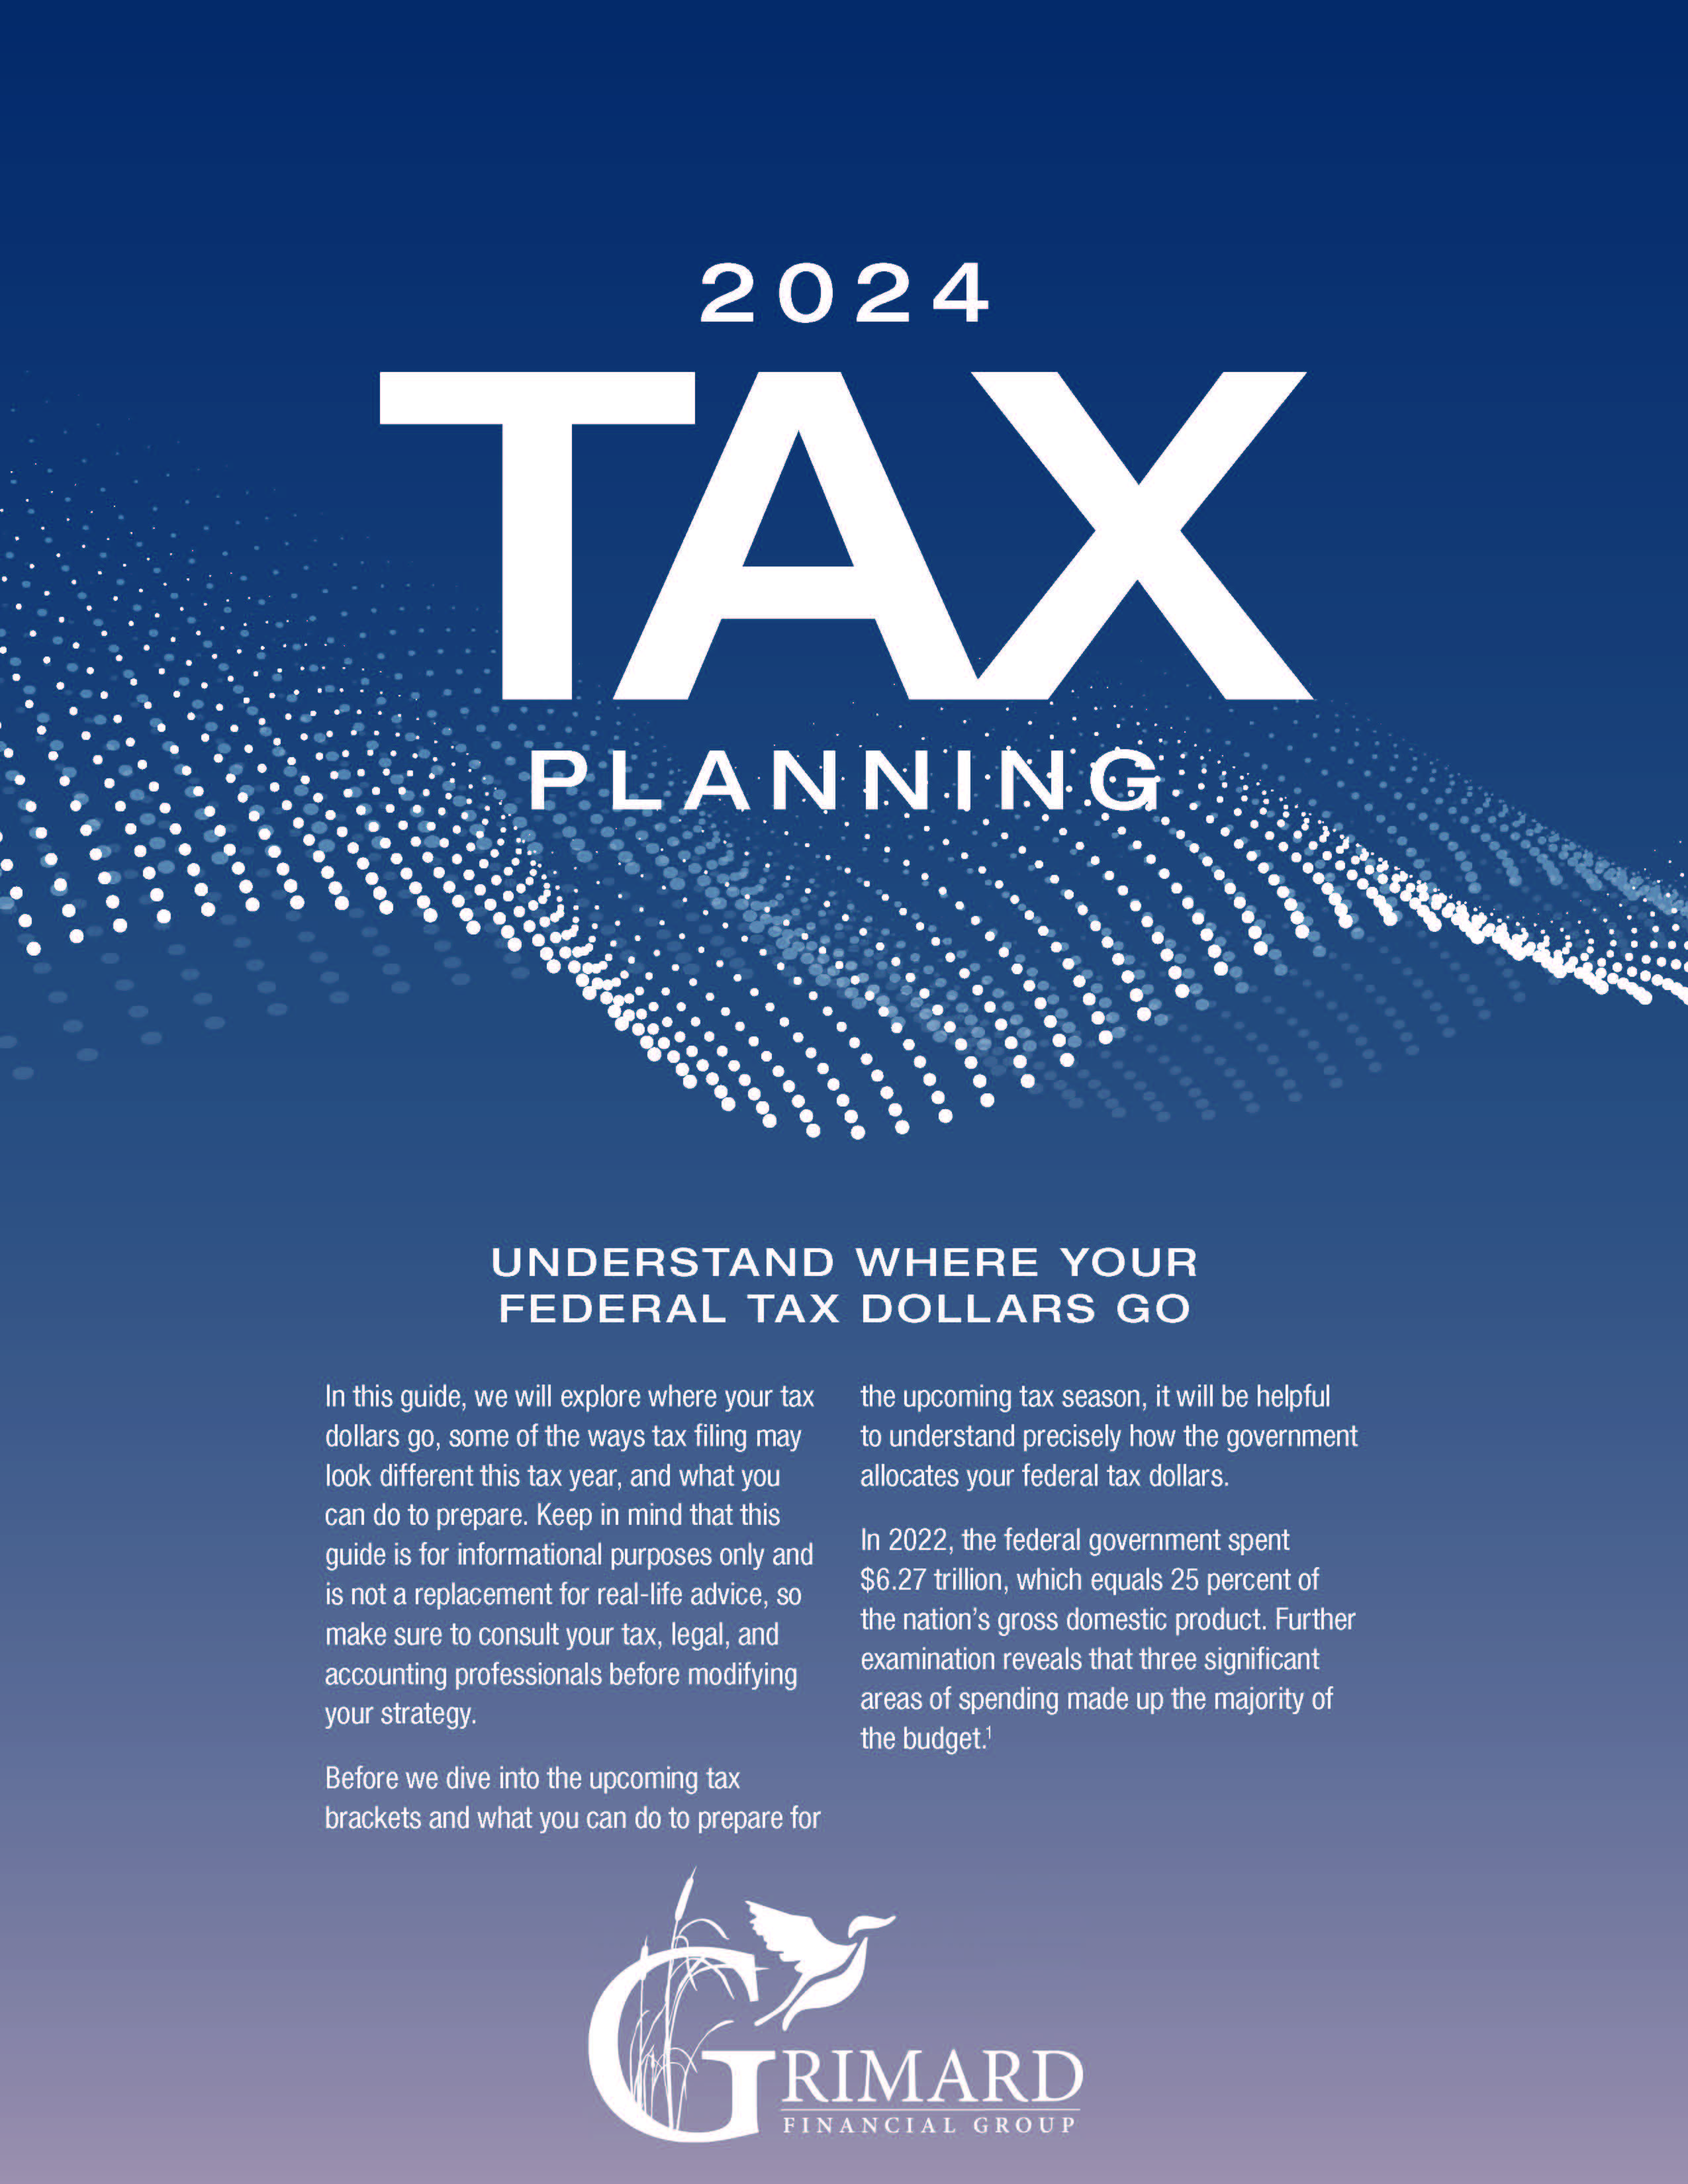 2021 Tax Landscape